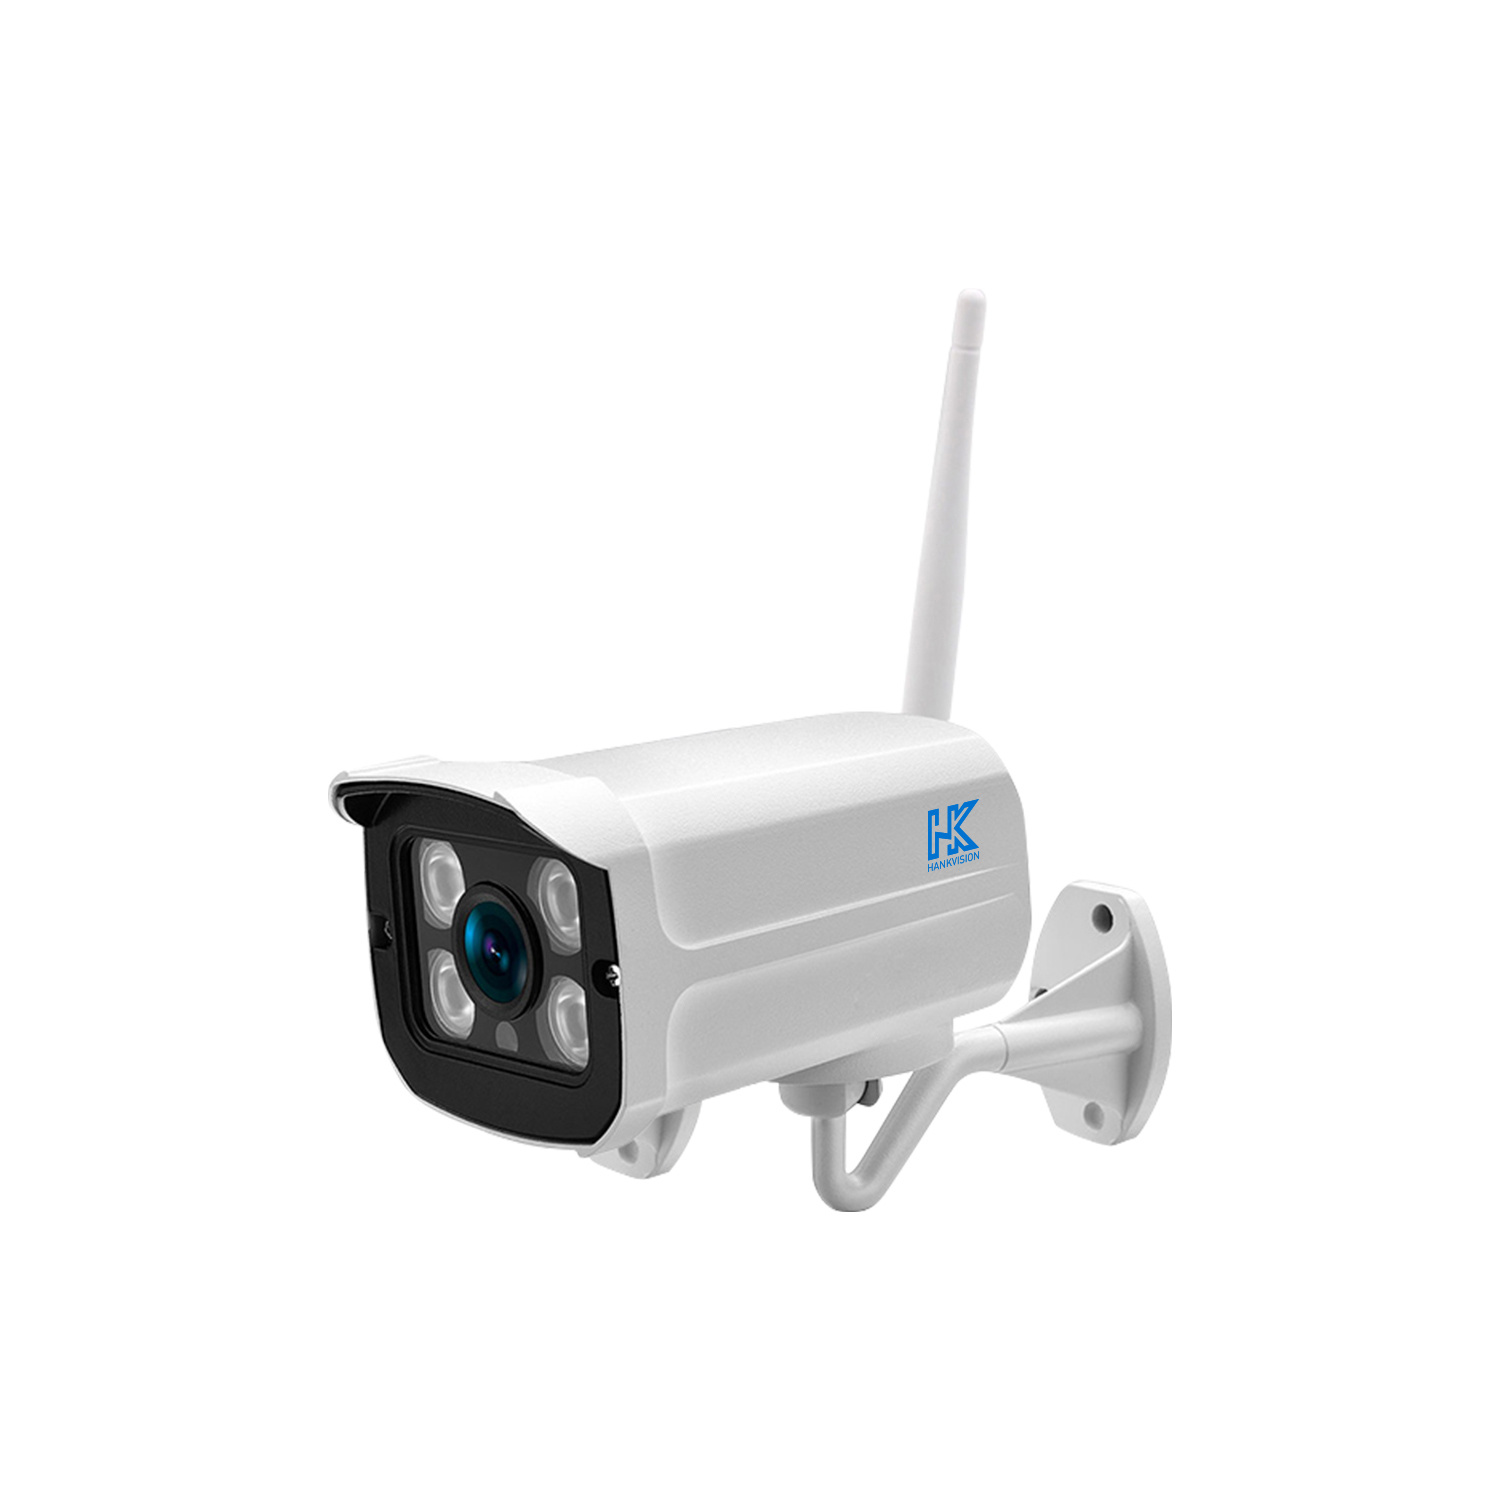 Hankvision Wireless Kit WiFi NVR Kit 4CH CCTV Camera System 2MP Bullet IP Camera